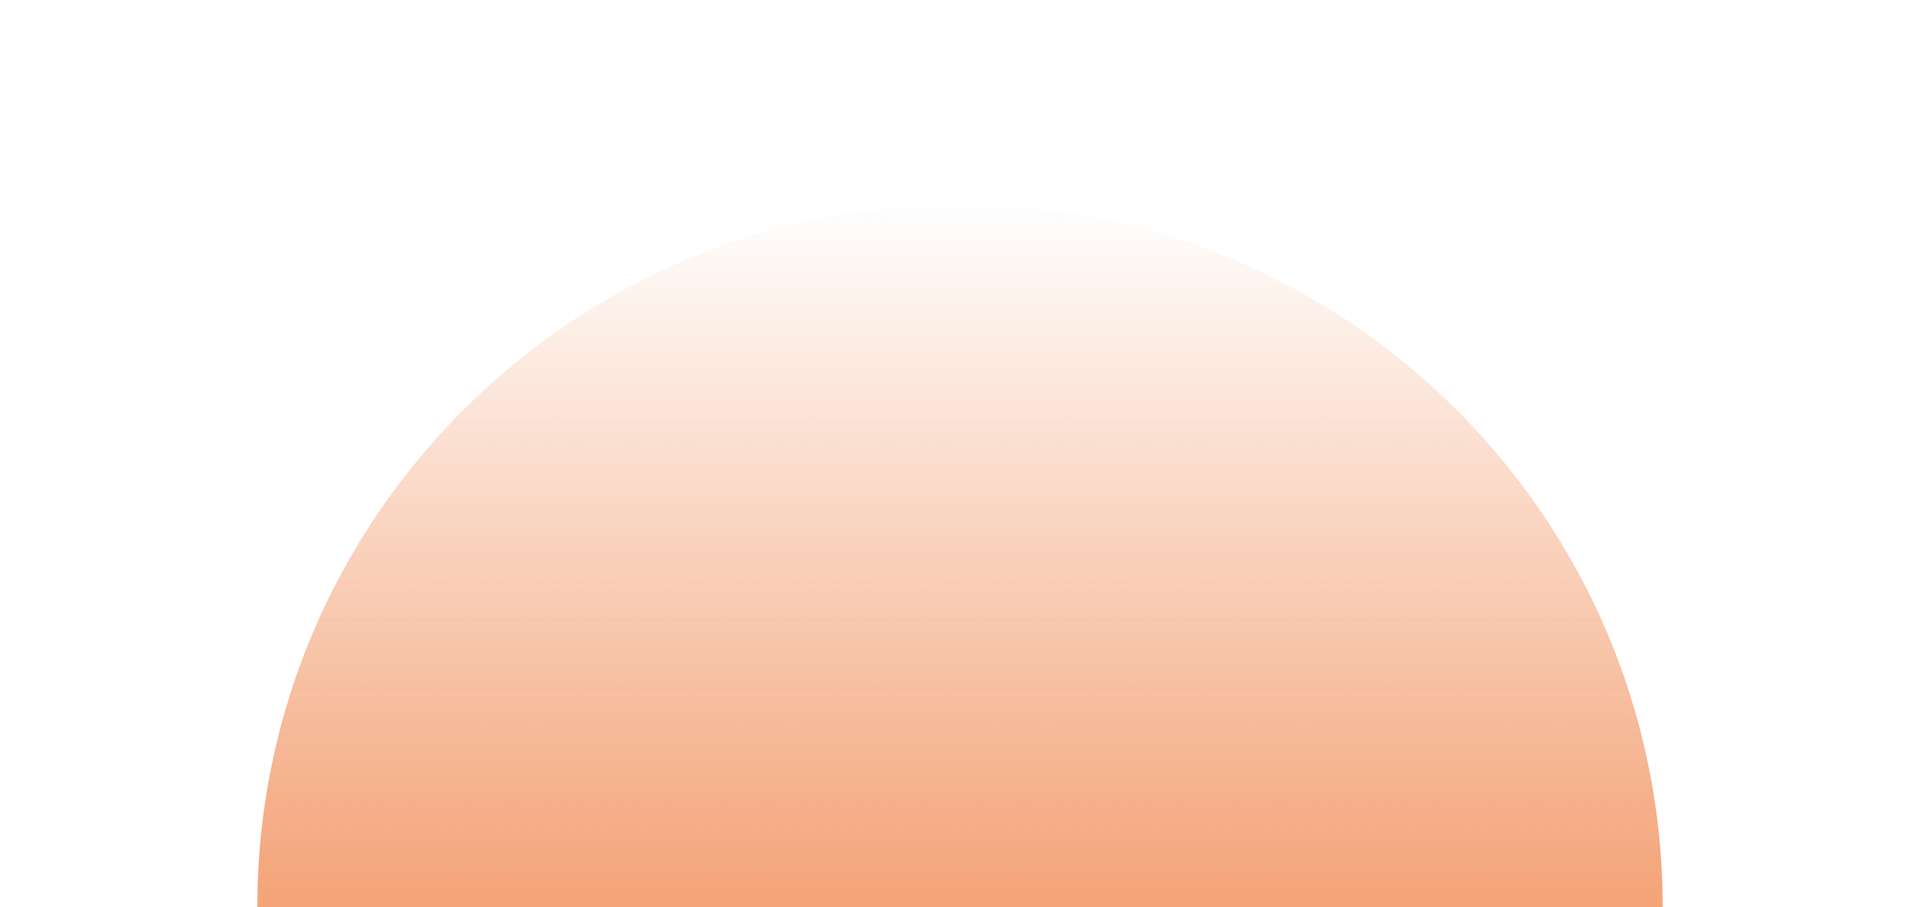 Orange semi-circulaire